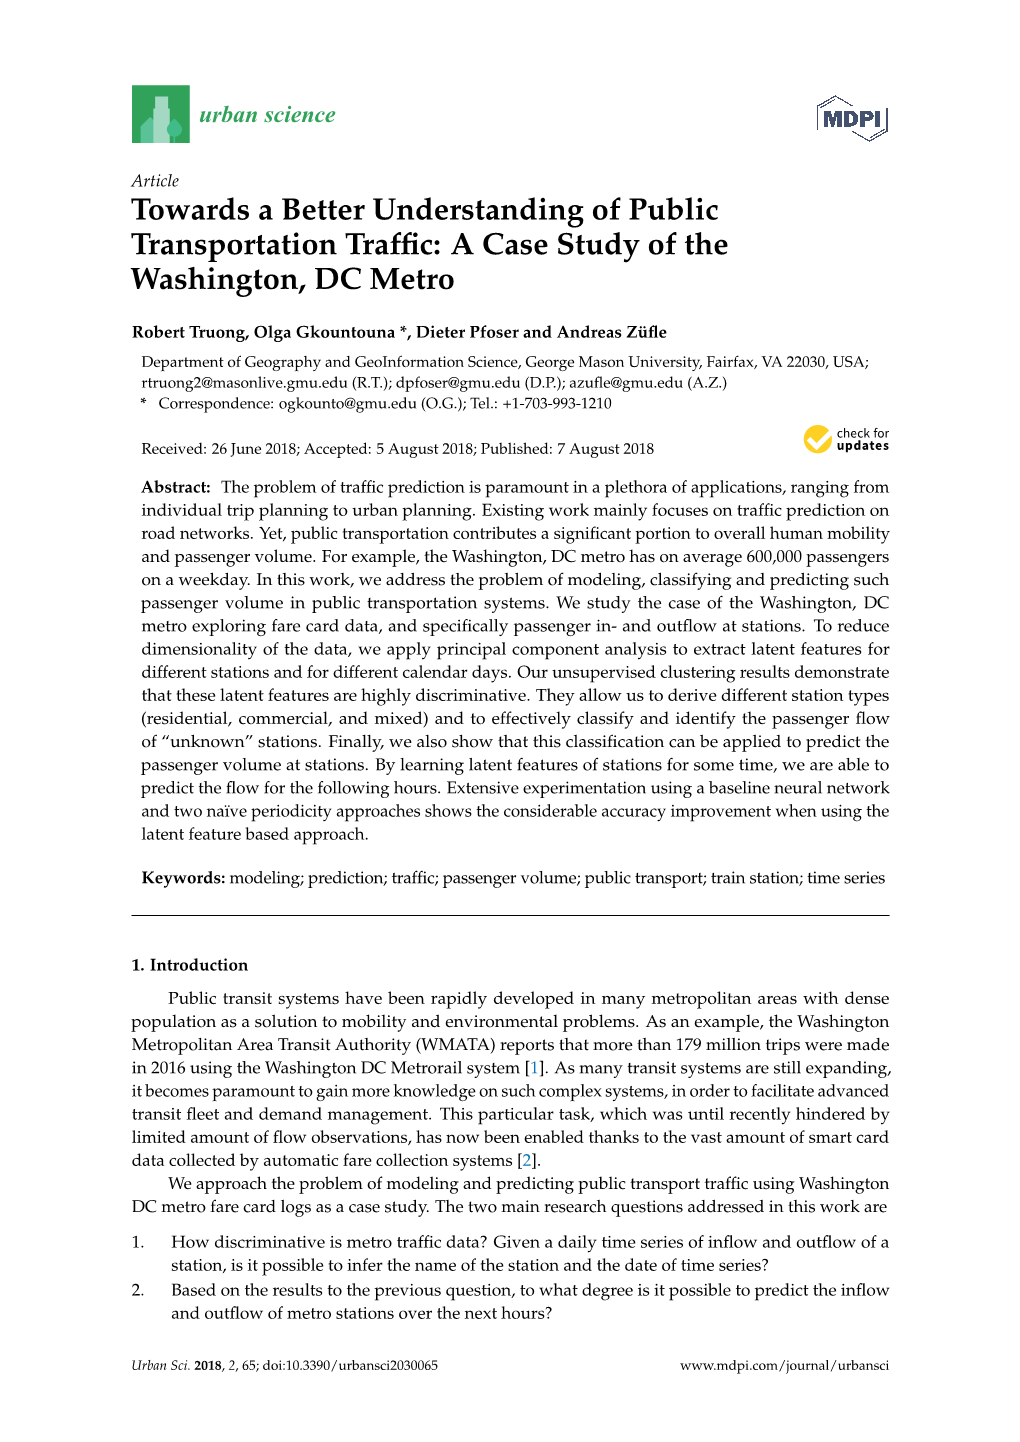 Towards a Better Understanding of Public Transportation Traffic: A